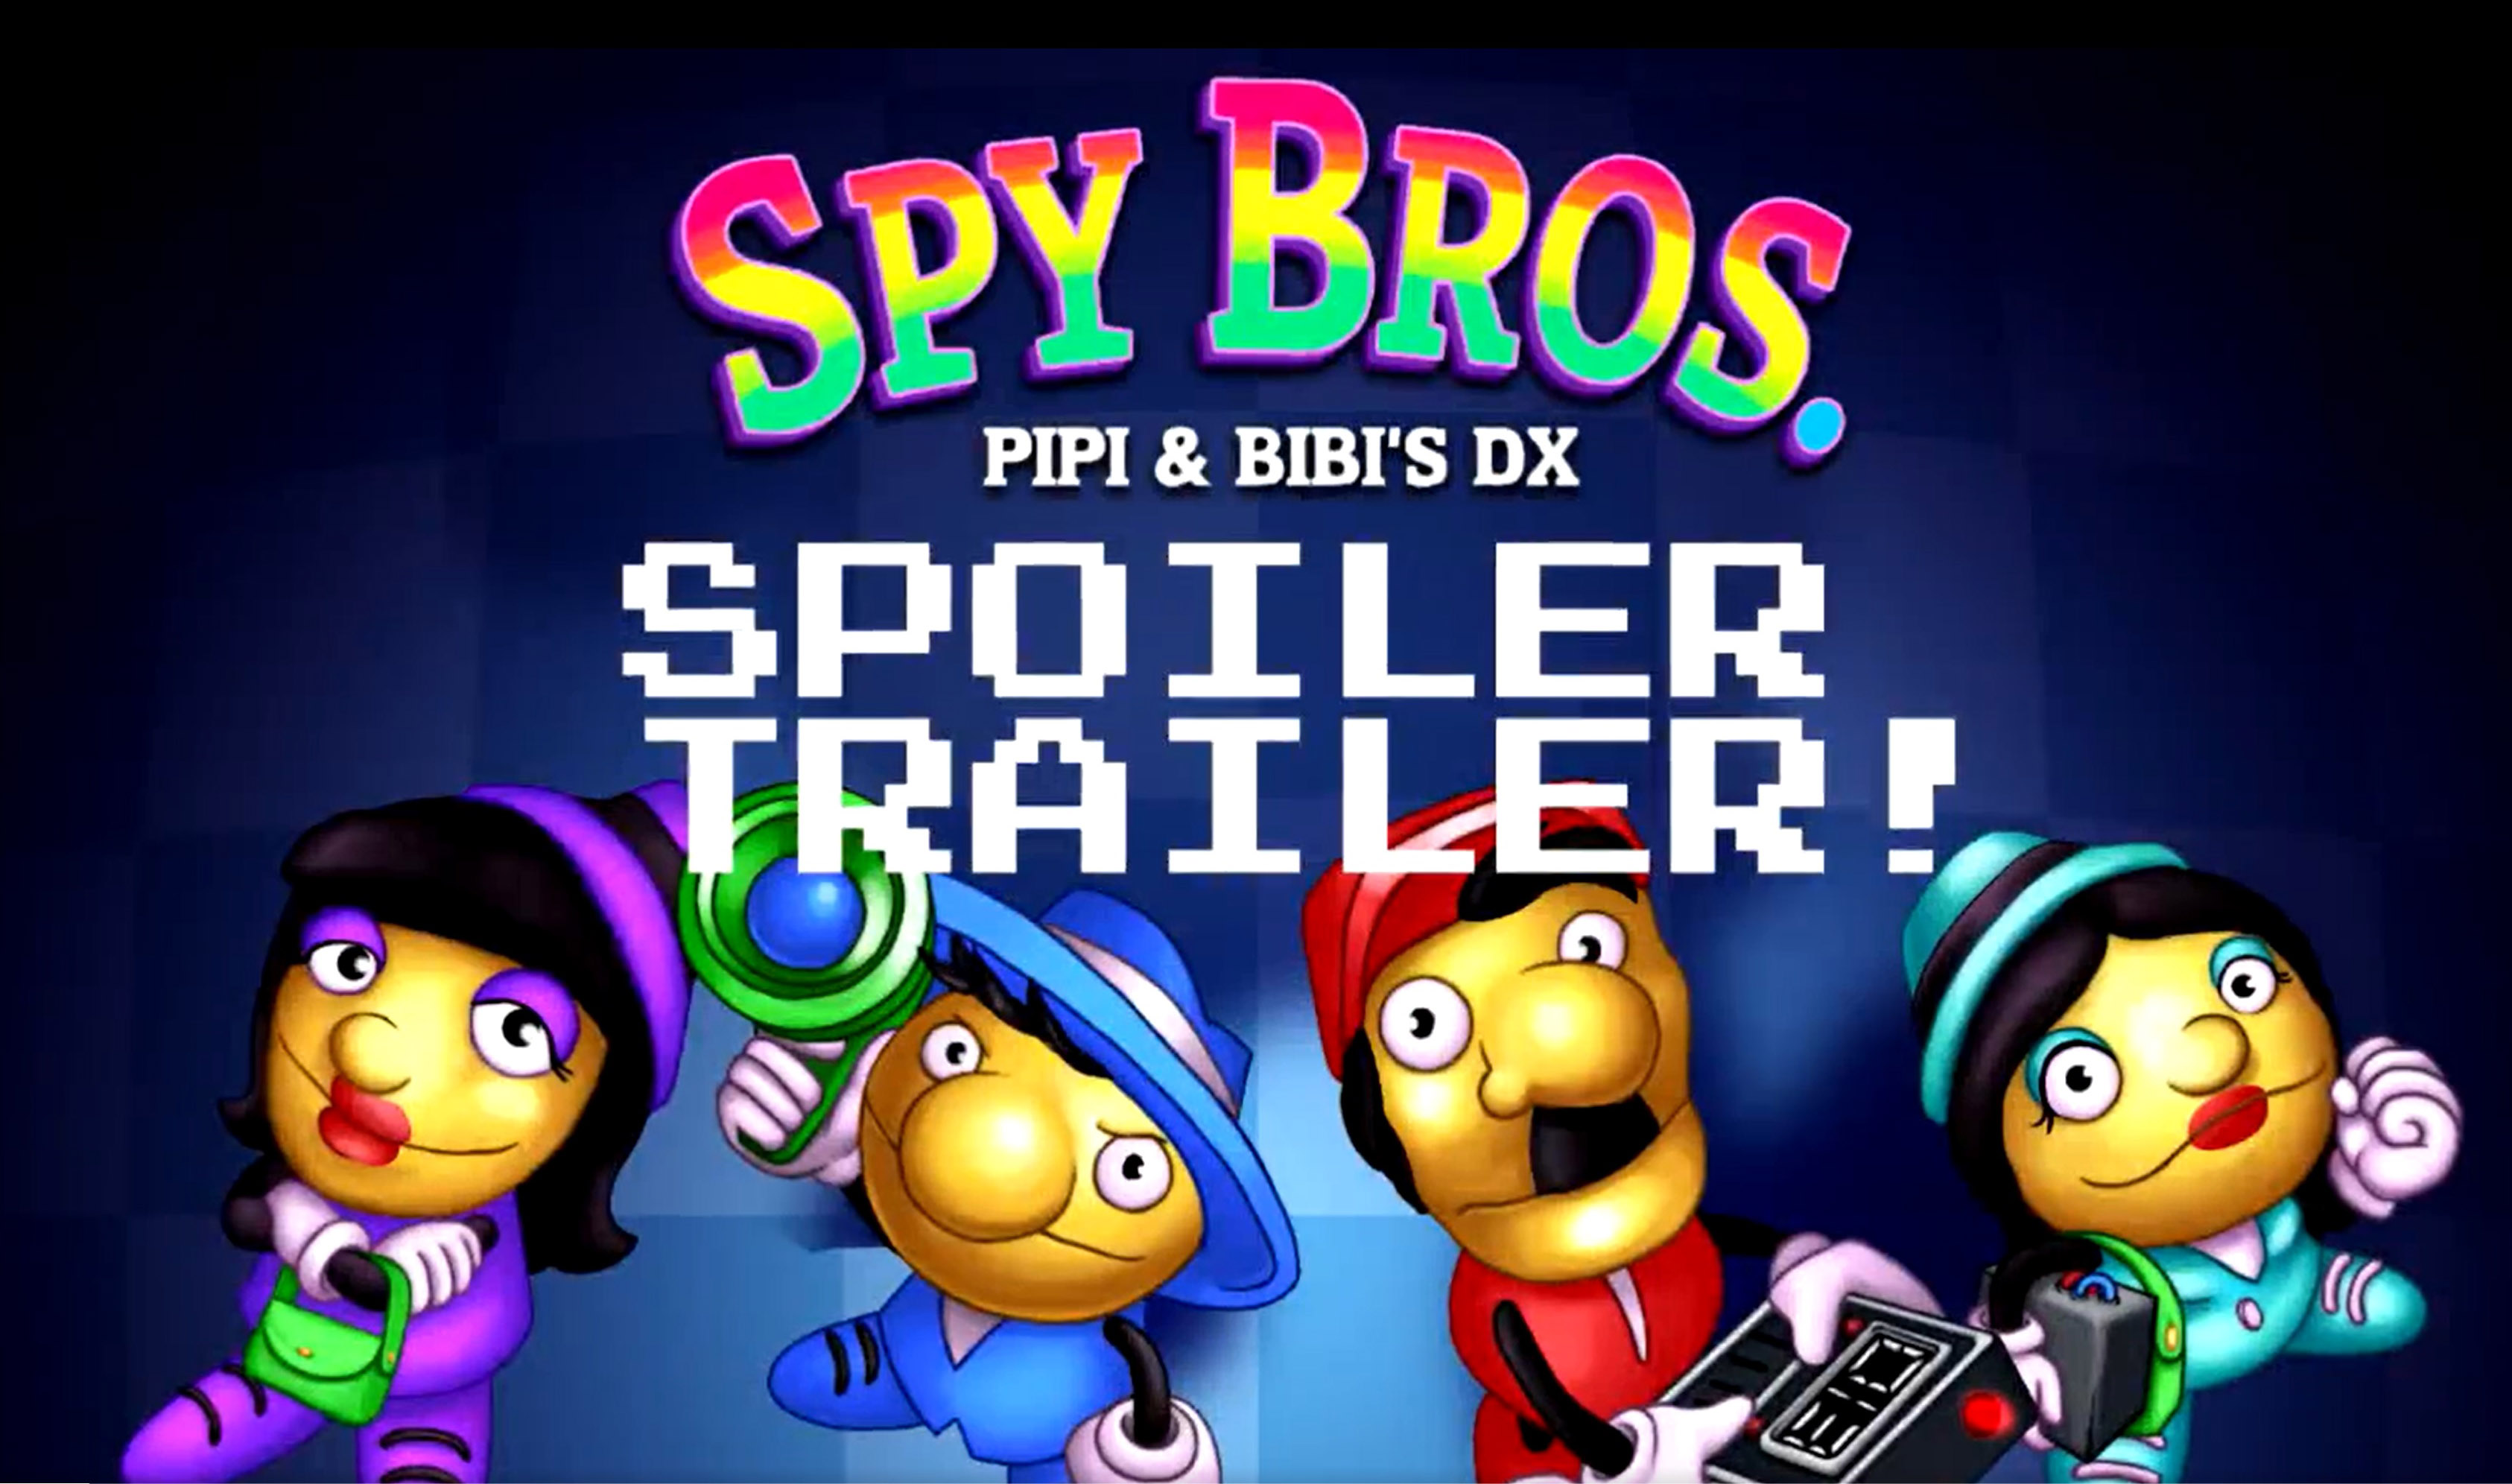 PIPI & BIBI'S will be remade as "SPY BROS. PIPI & BIBI'S DX"!